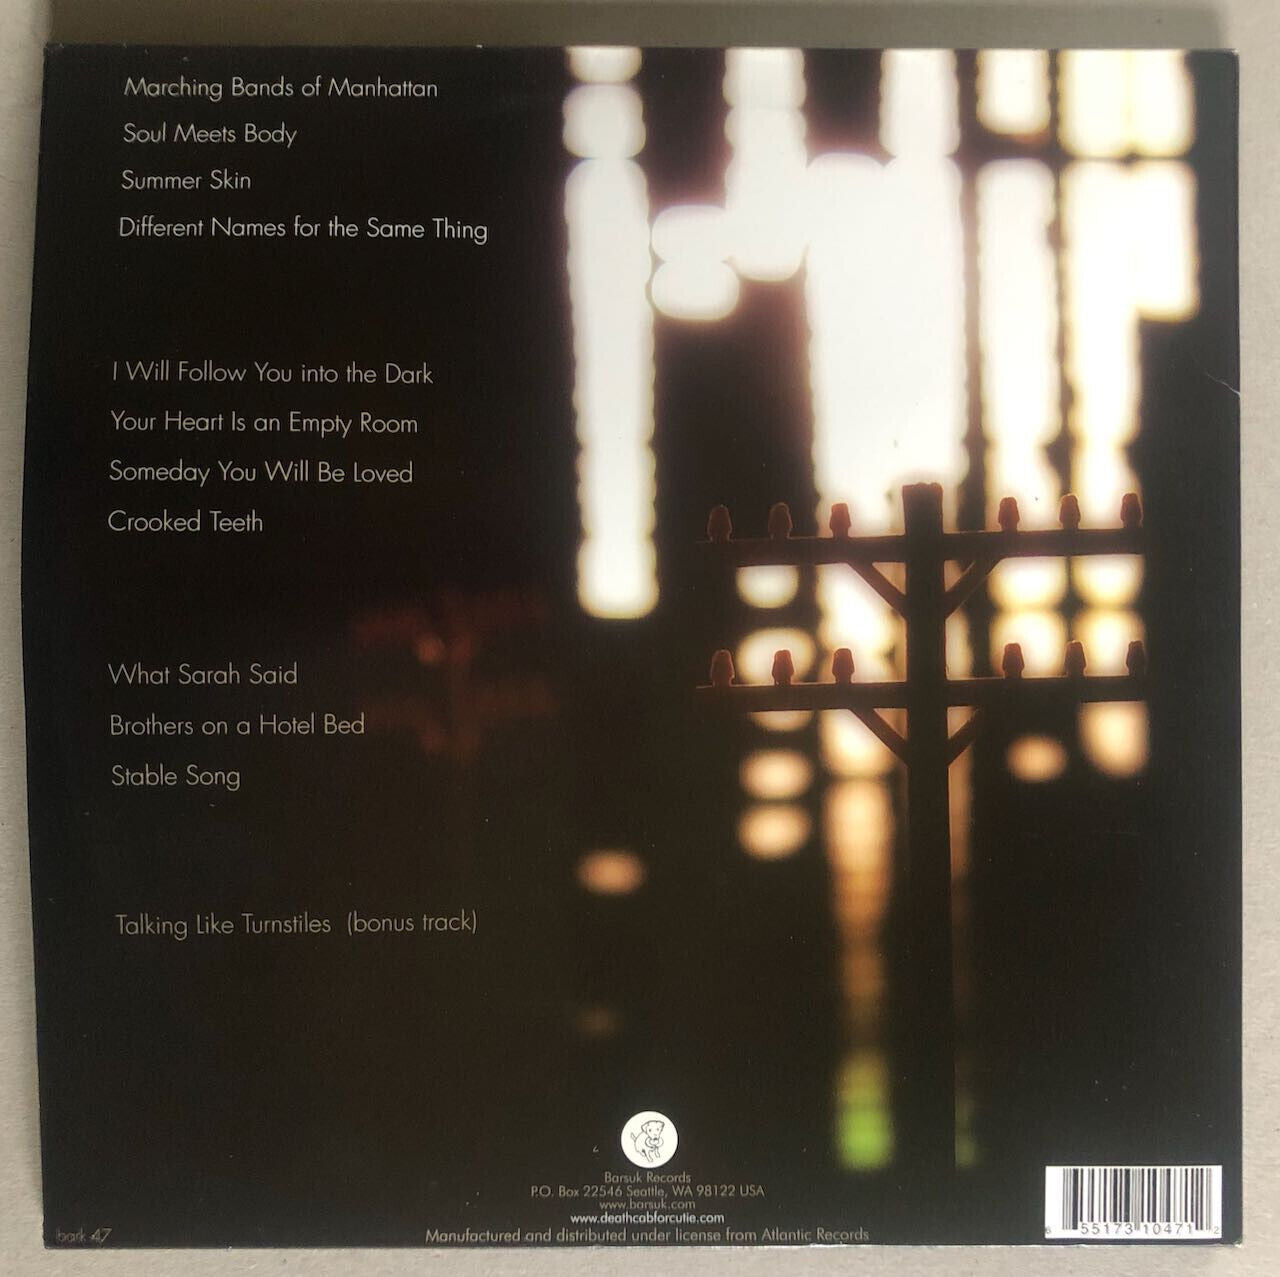 Death Cab For Cutie — Plans — 2 x LP — US original press —  Barsuk bark47 — 2005